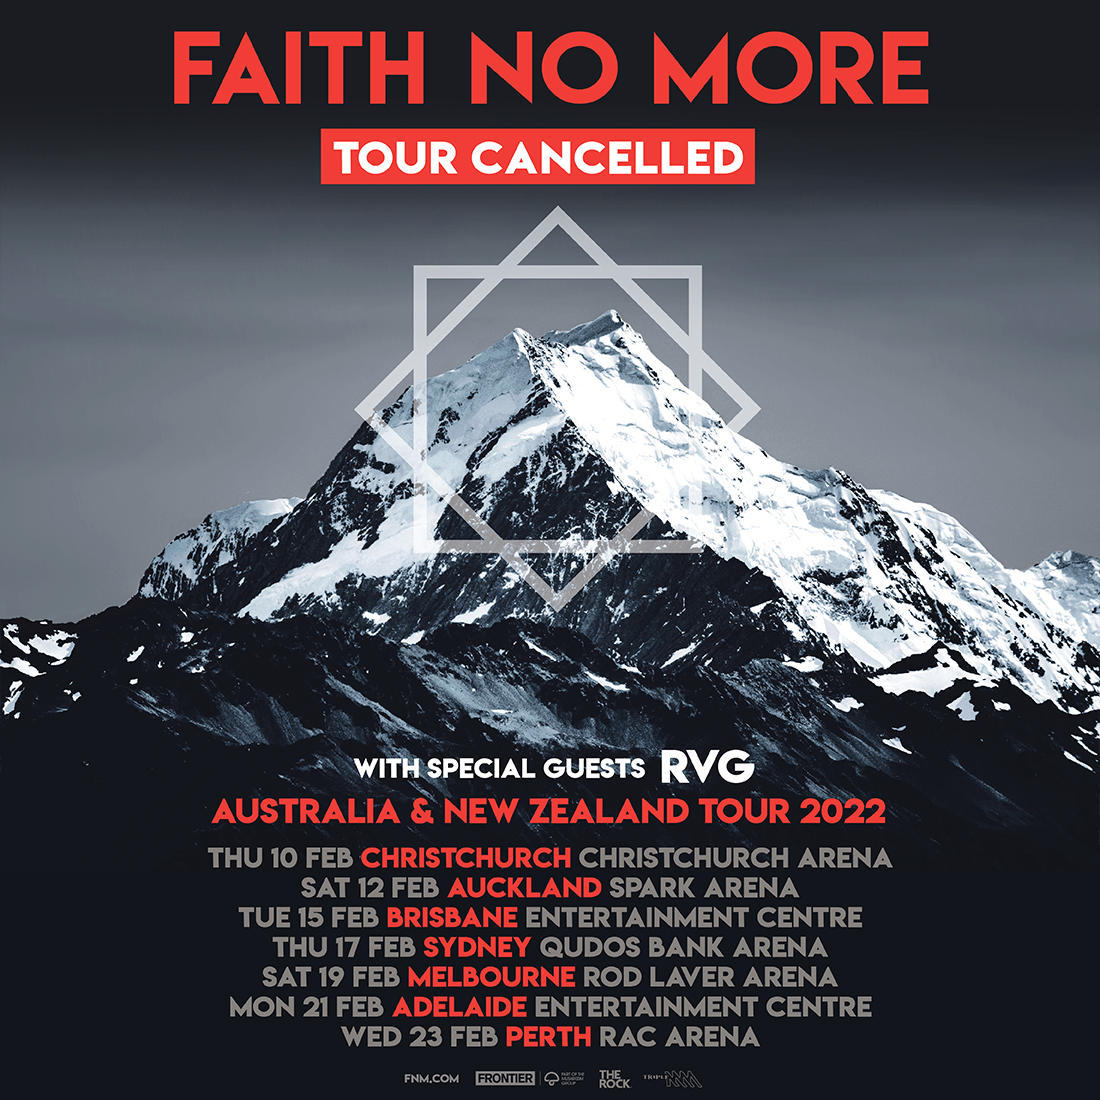 FAITH NO MORE AUSTRALIAN & NEW ZEALAND TOUR CANCELLED